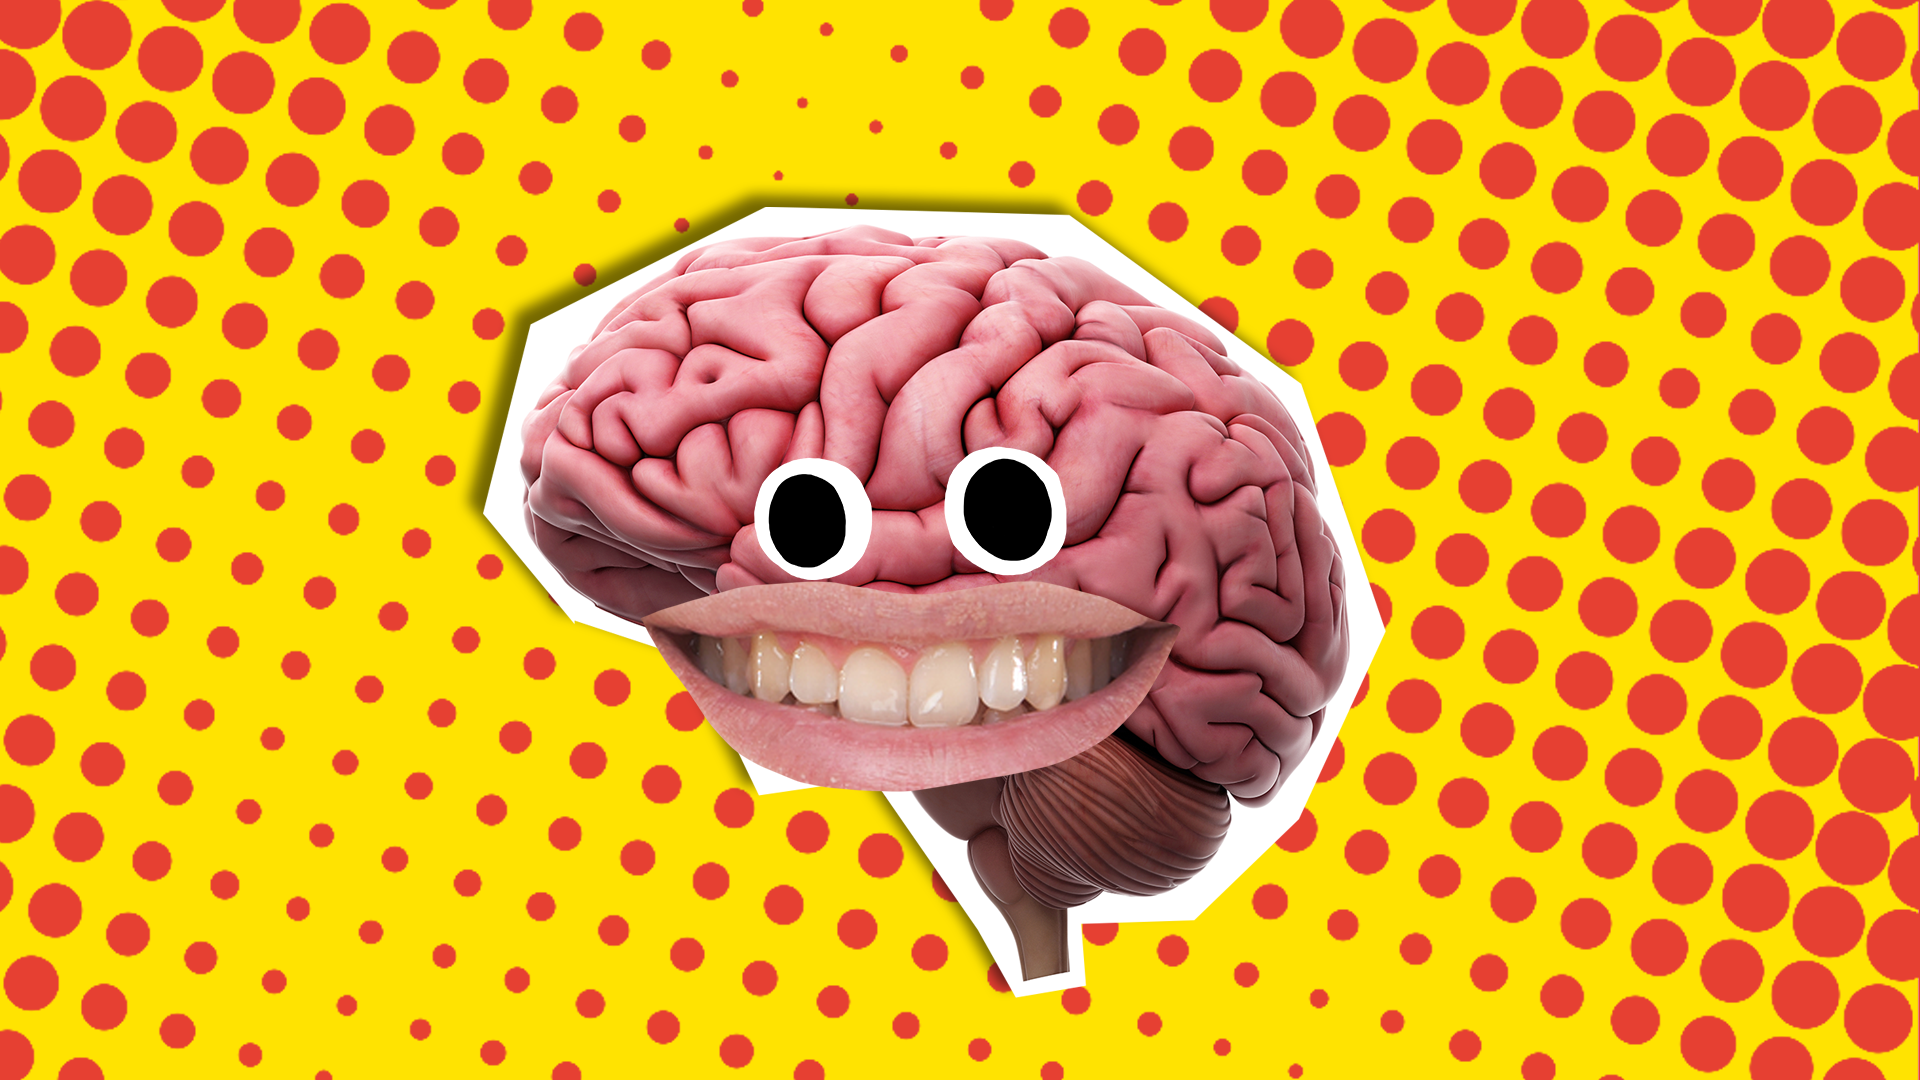 A smiling brain